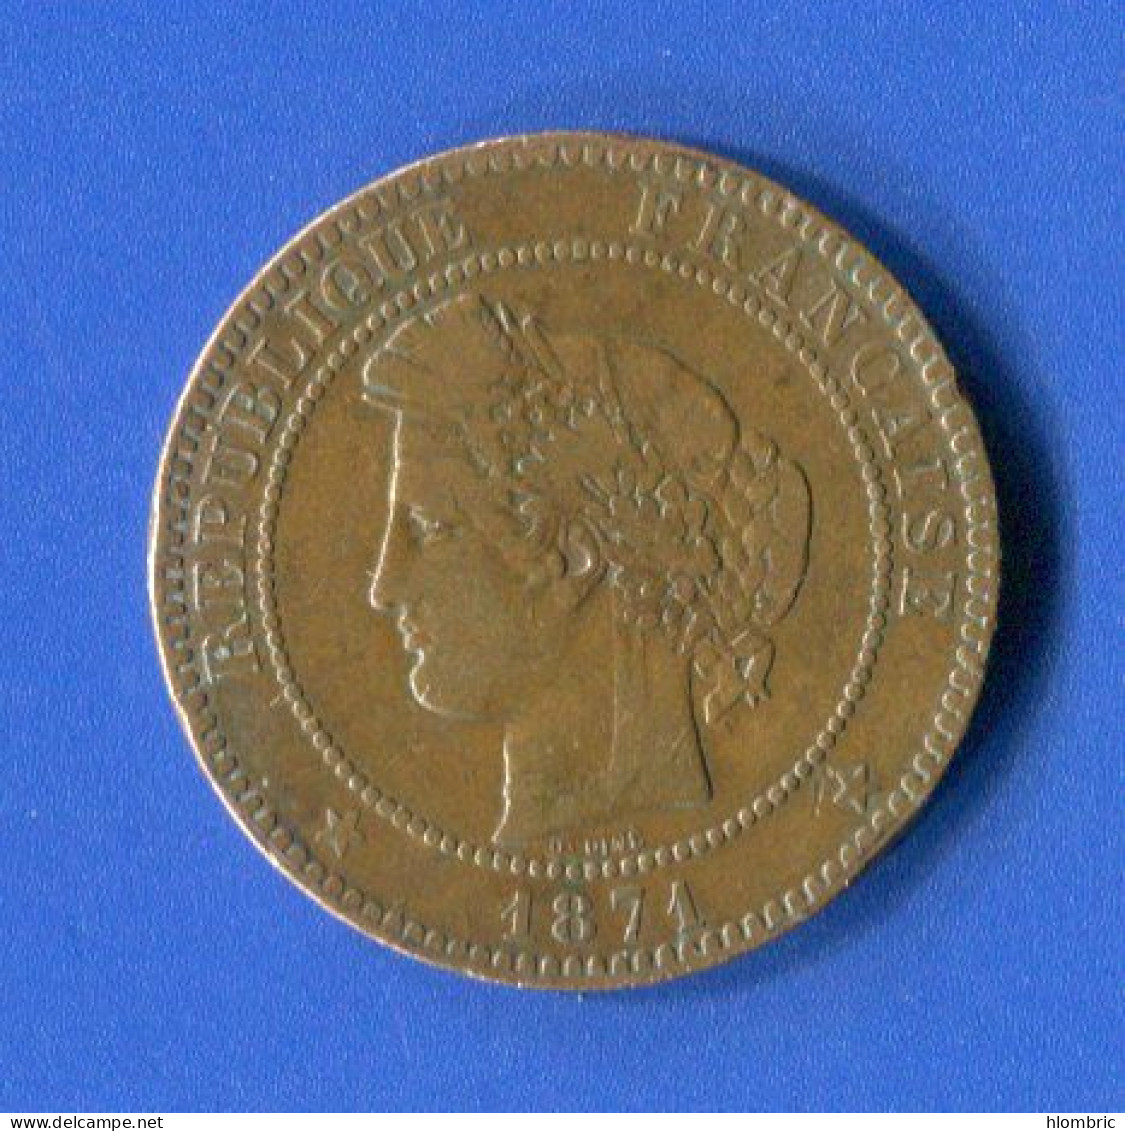 10  Cents  1871 A - 1870-1871 Regering Van Nationale Verdediging